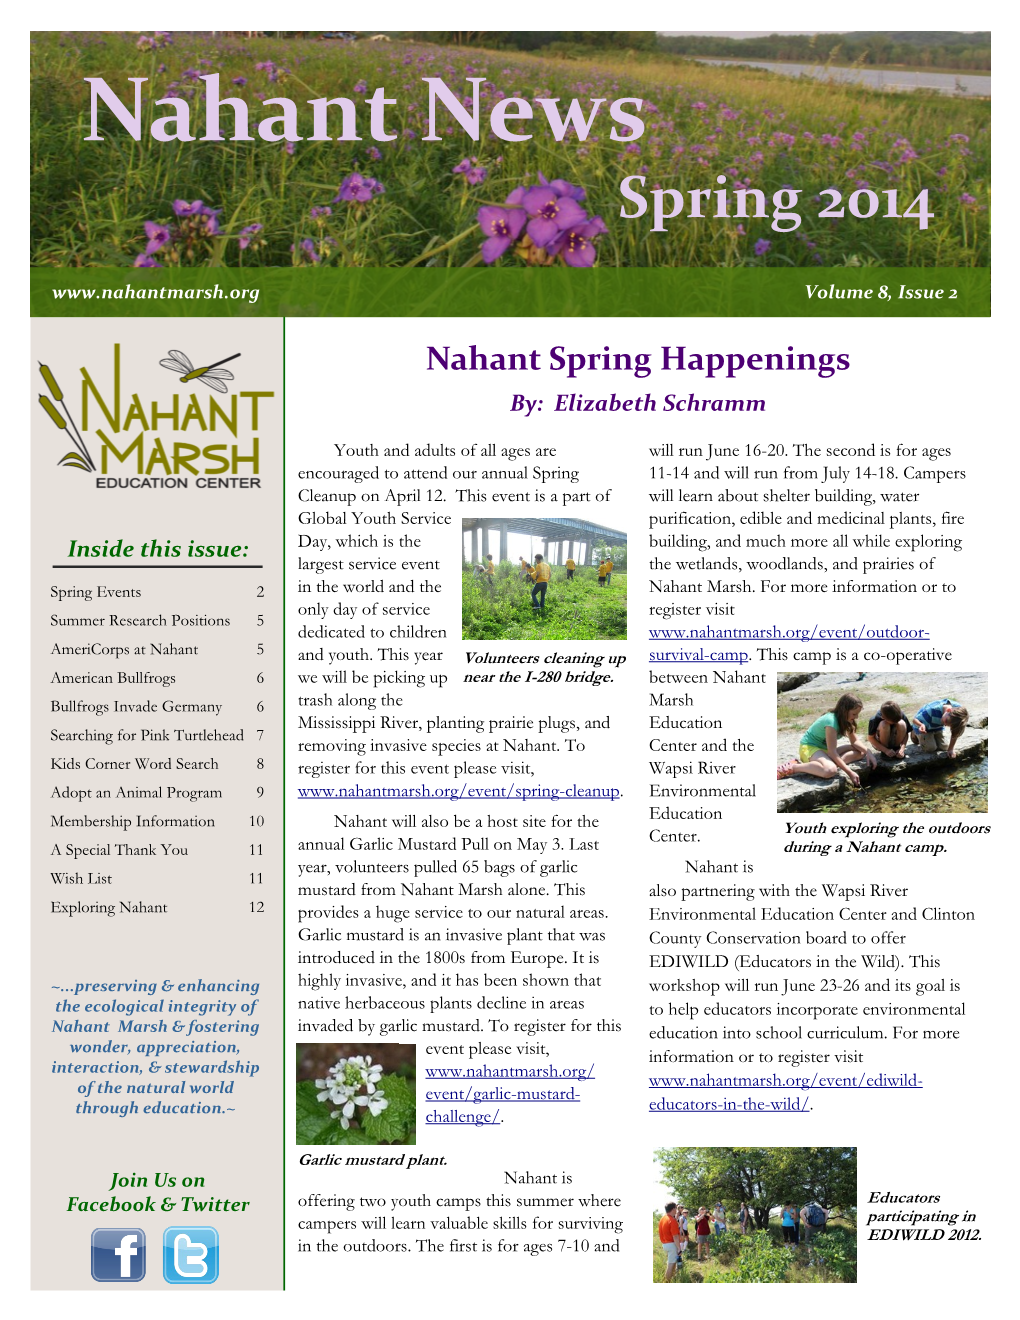 Nahant News Spring 2014